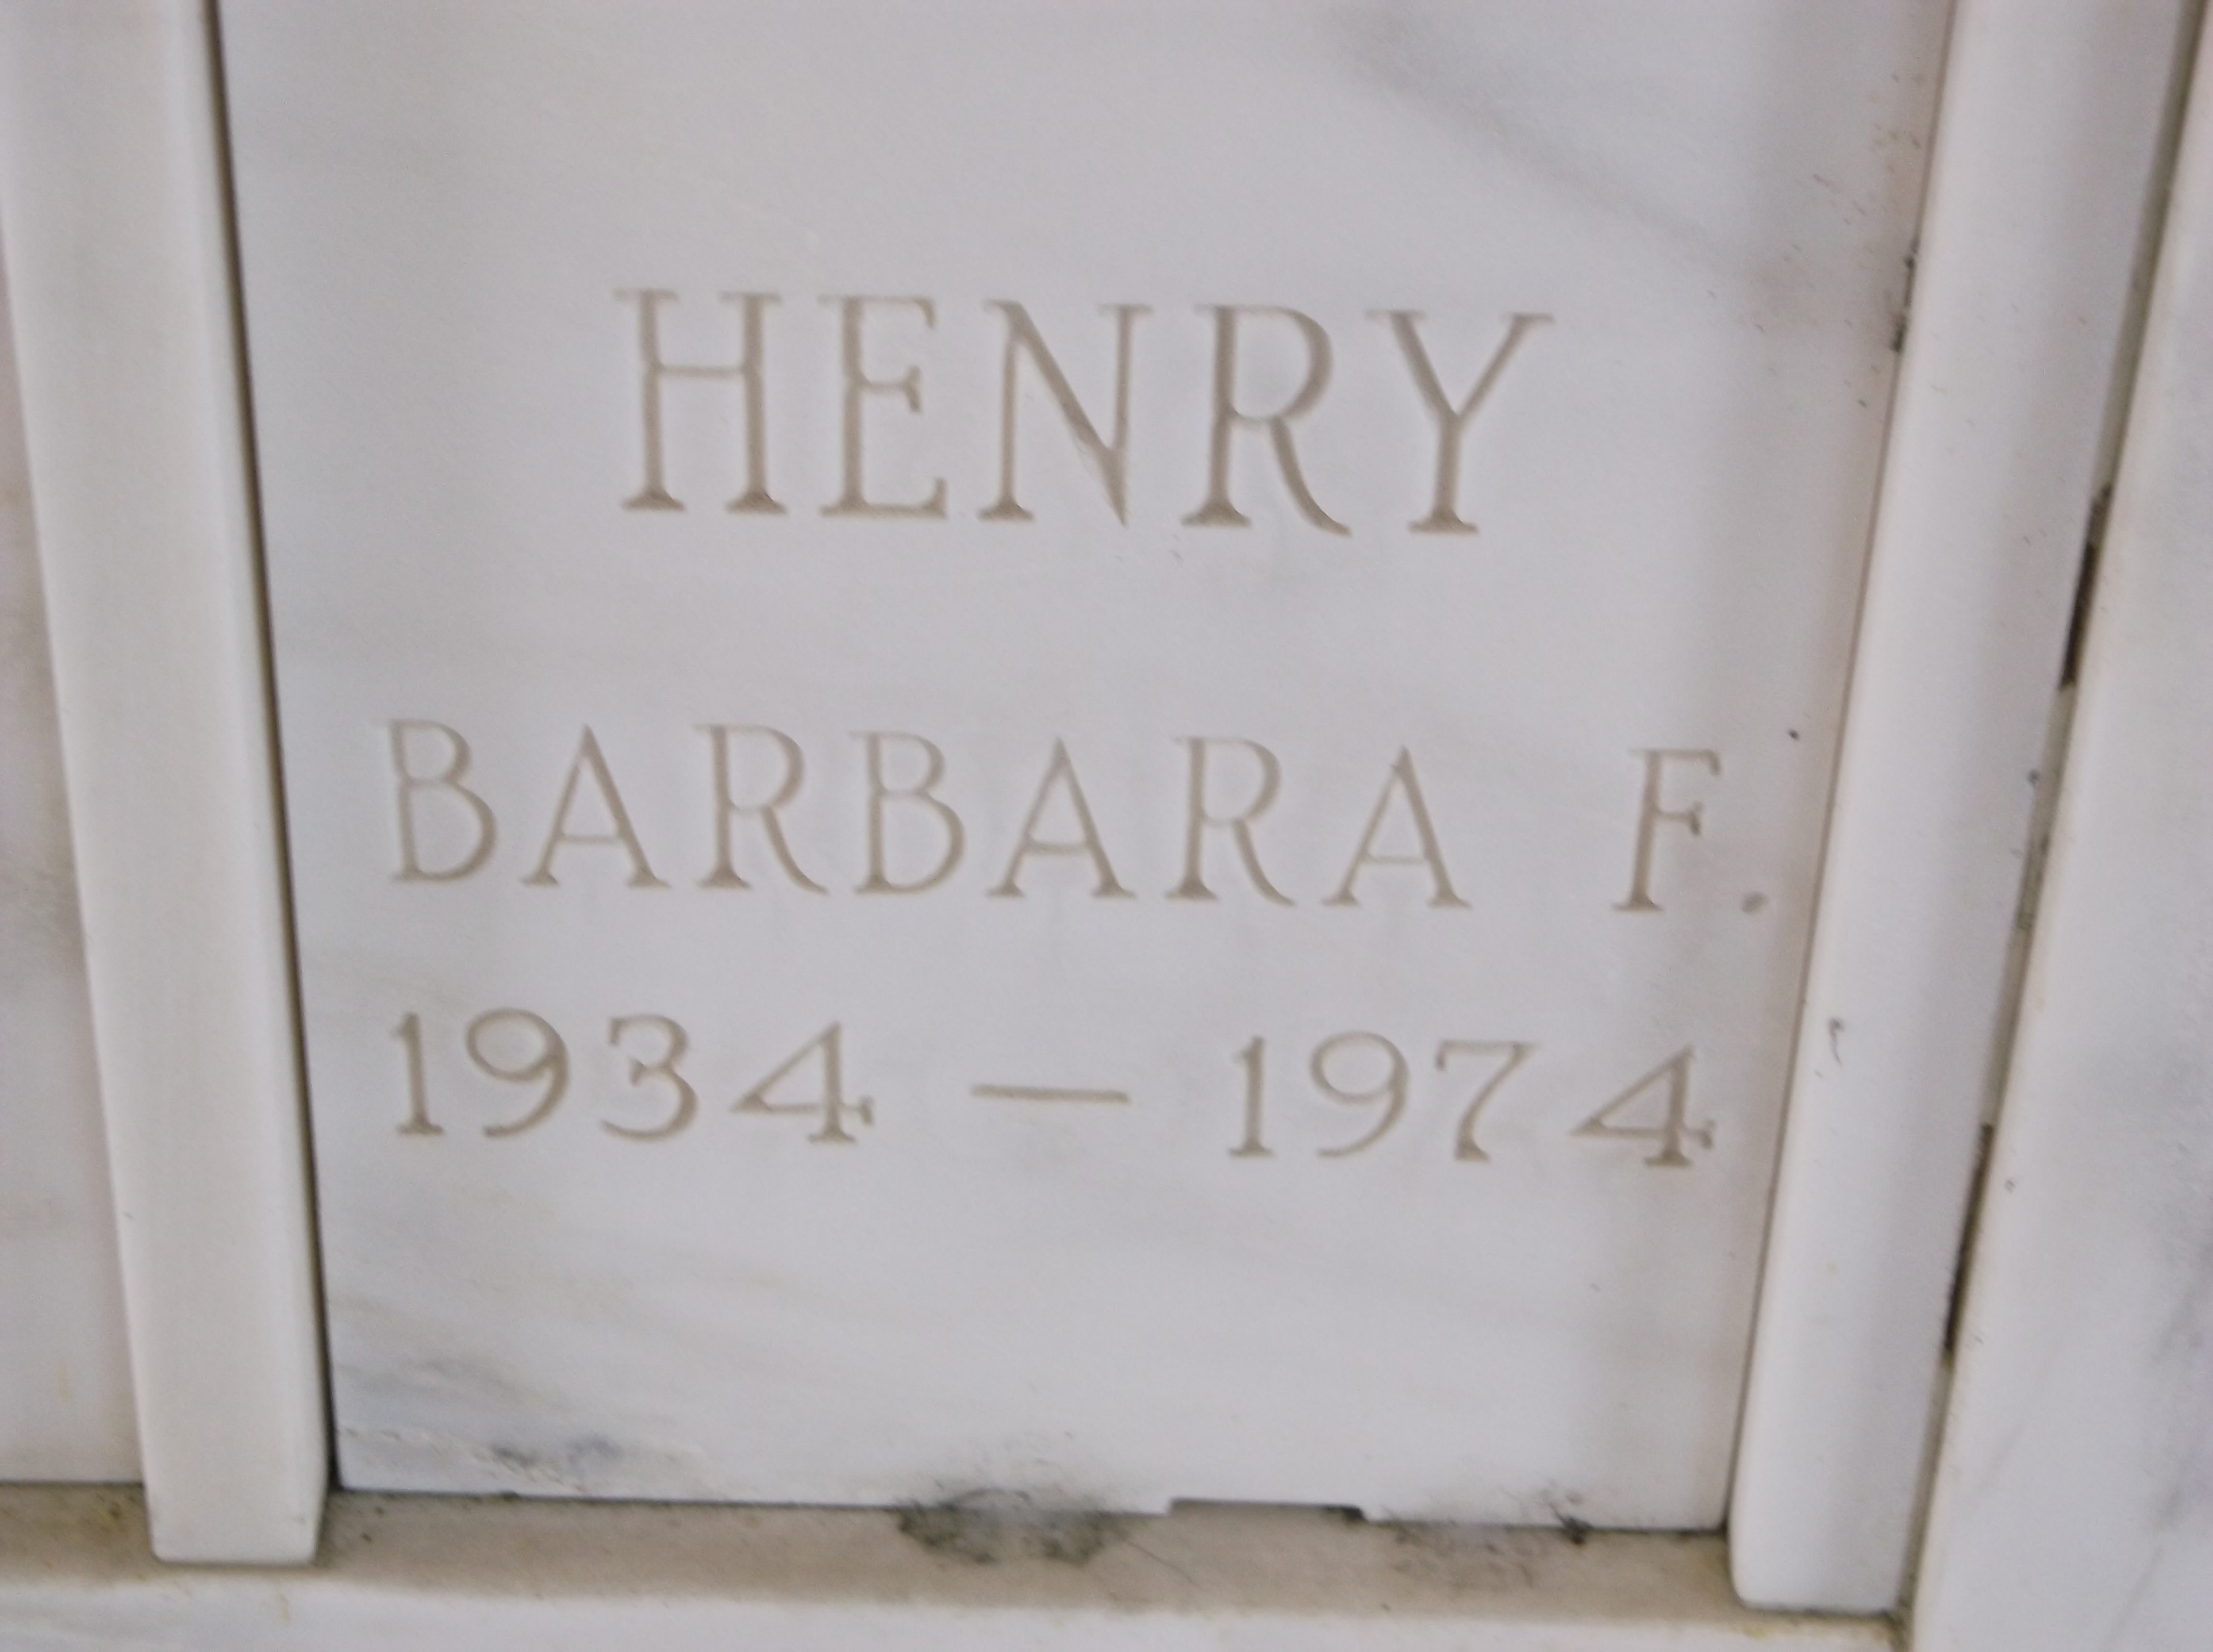 Barbara F Henry